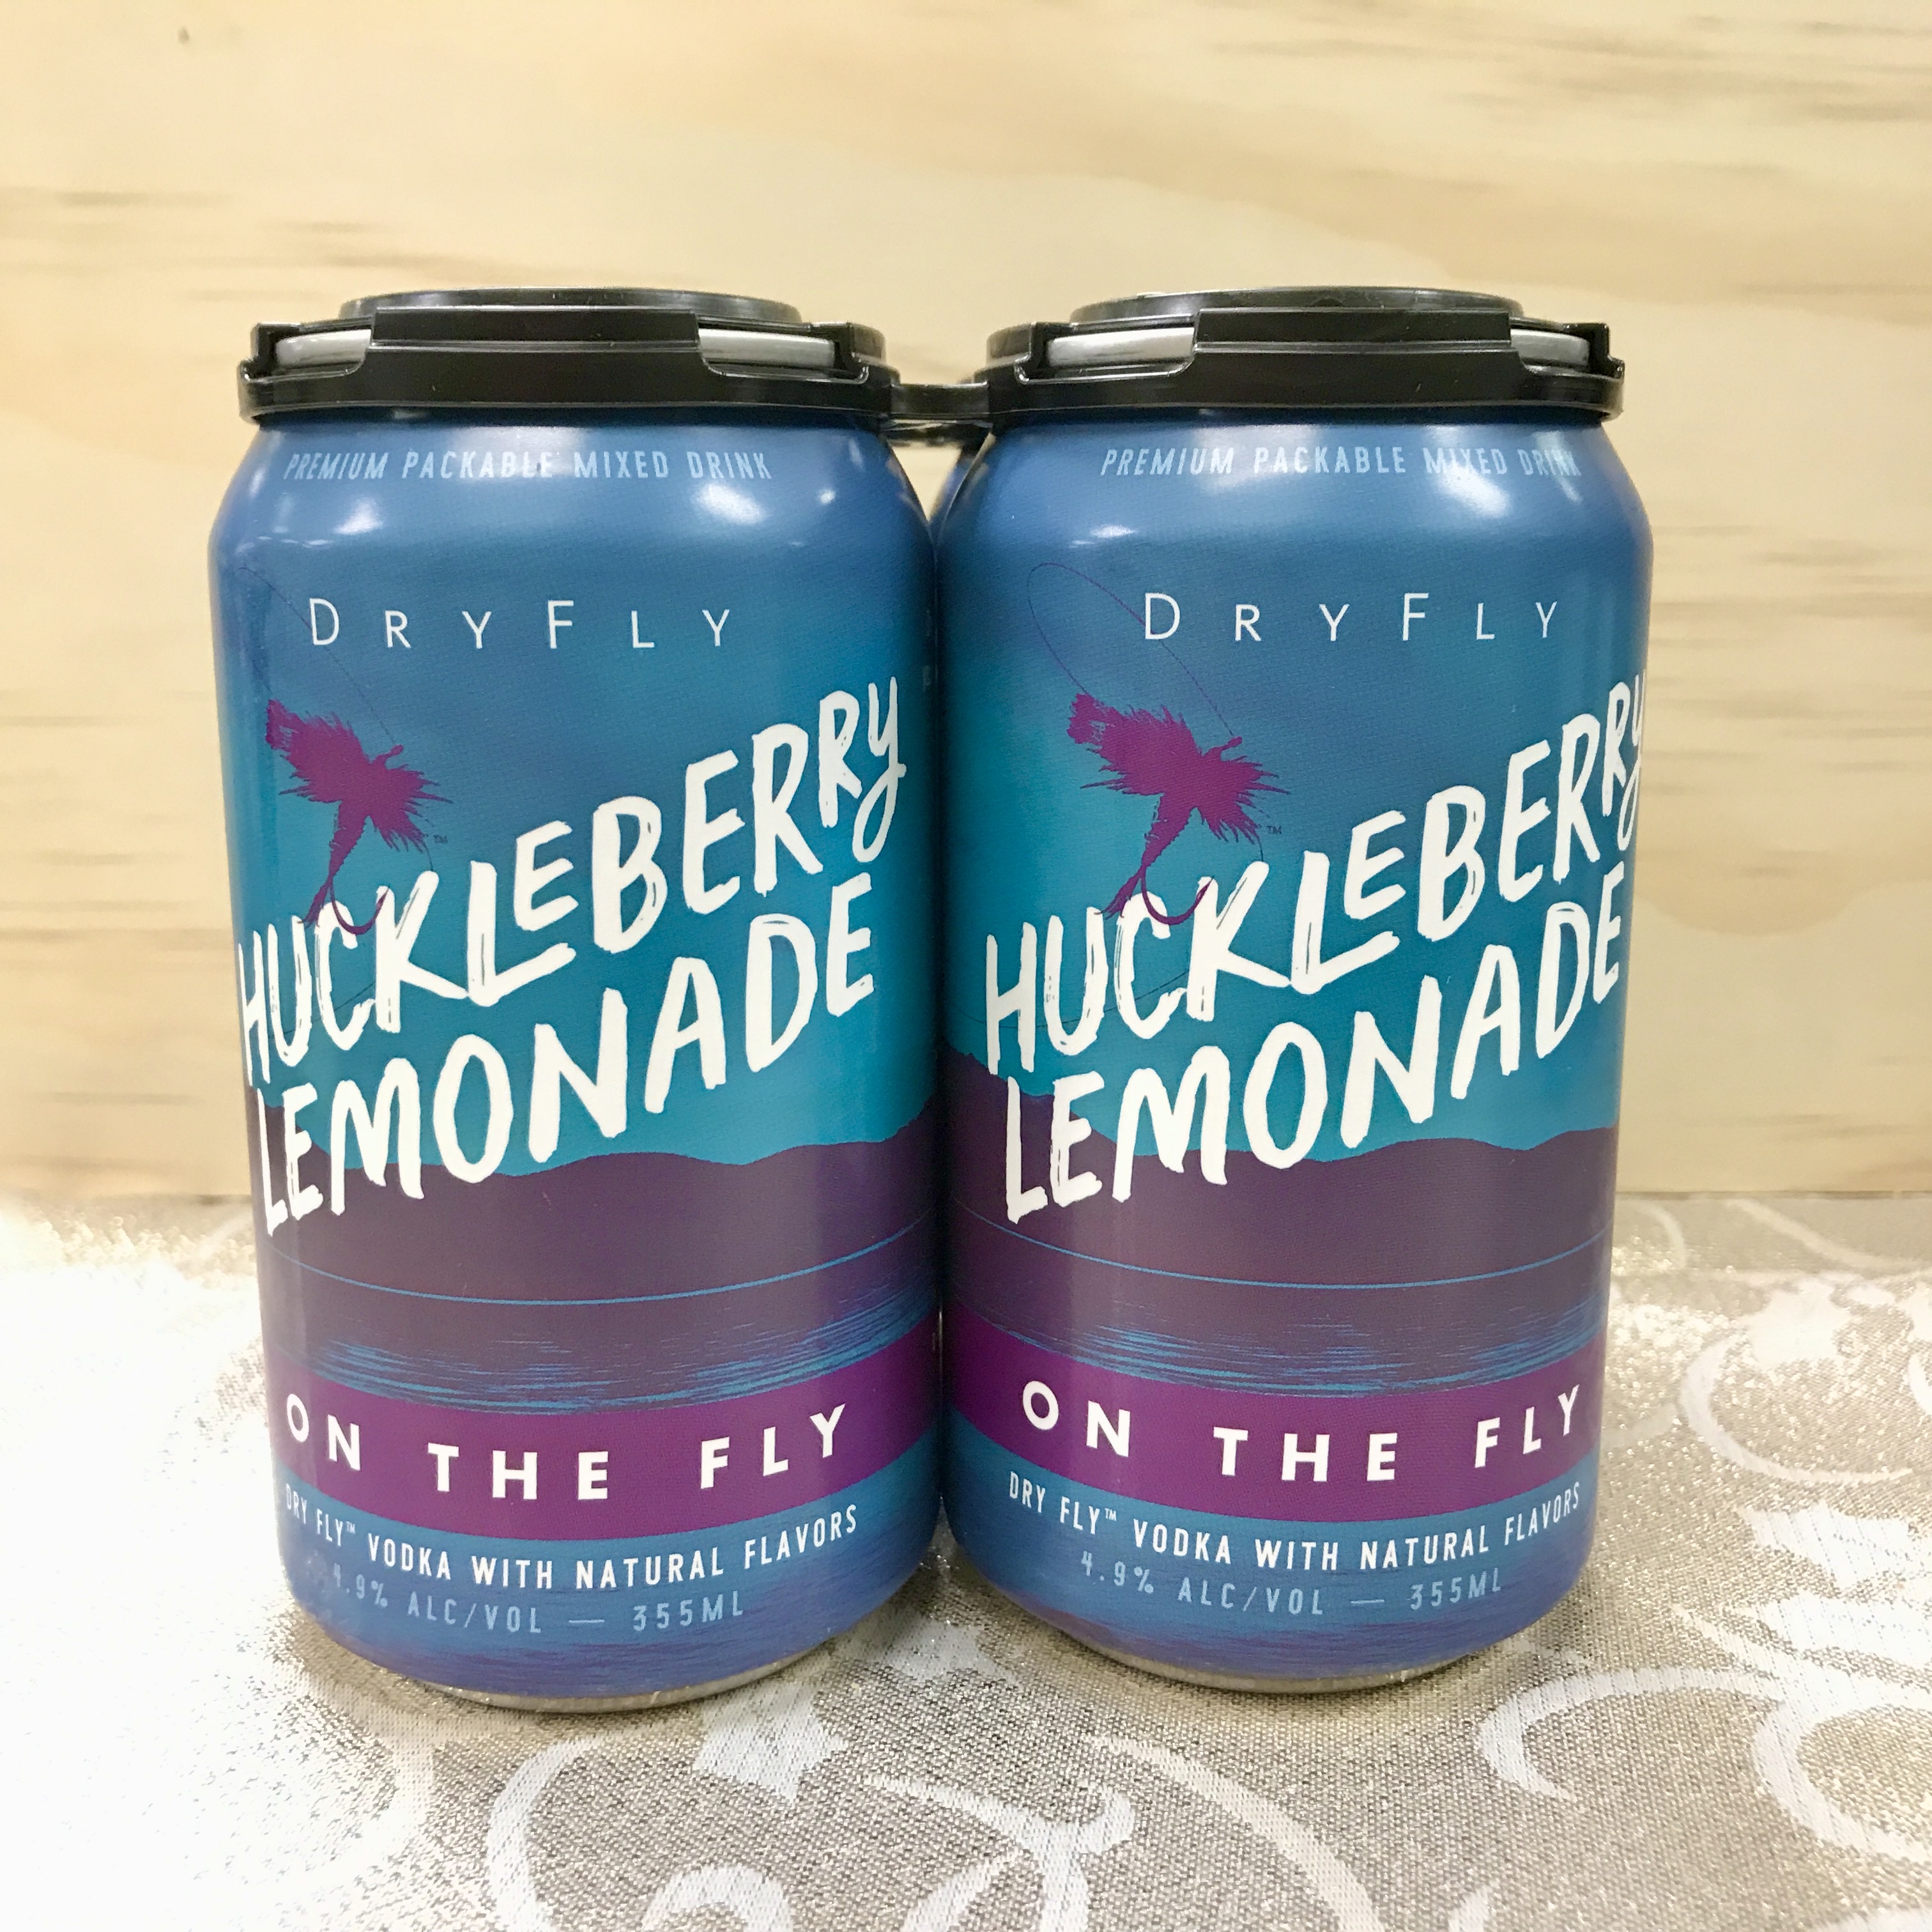 Dry Fly On the Fly Huckleberry Lemonade 4 x 12 oz cans